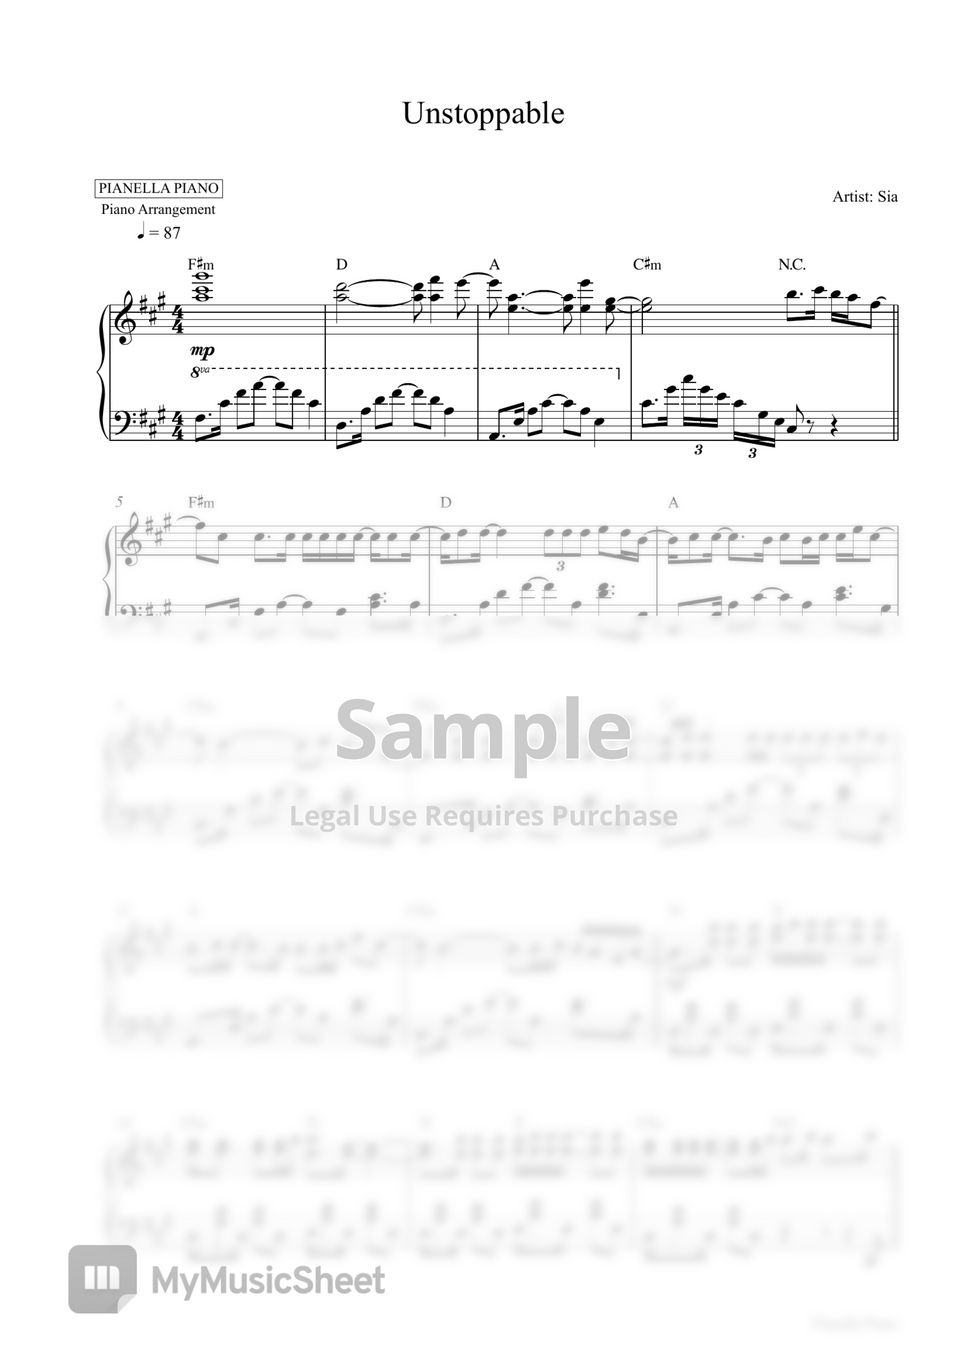 Sia - Unstoppable (Piano Sheet) by Pianella Piano